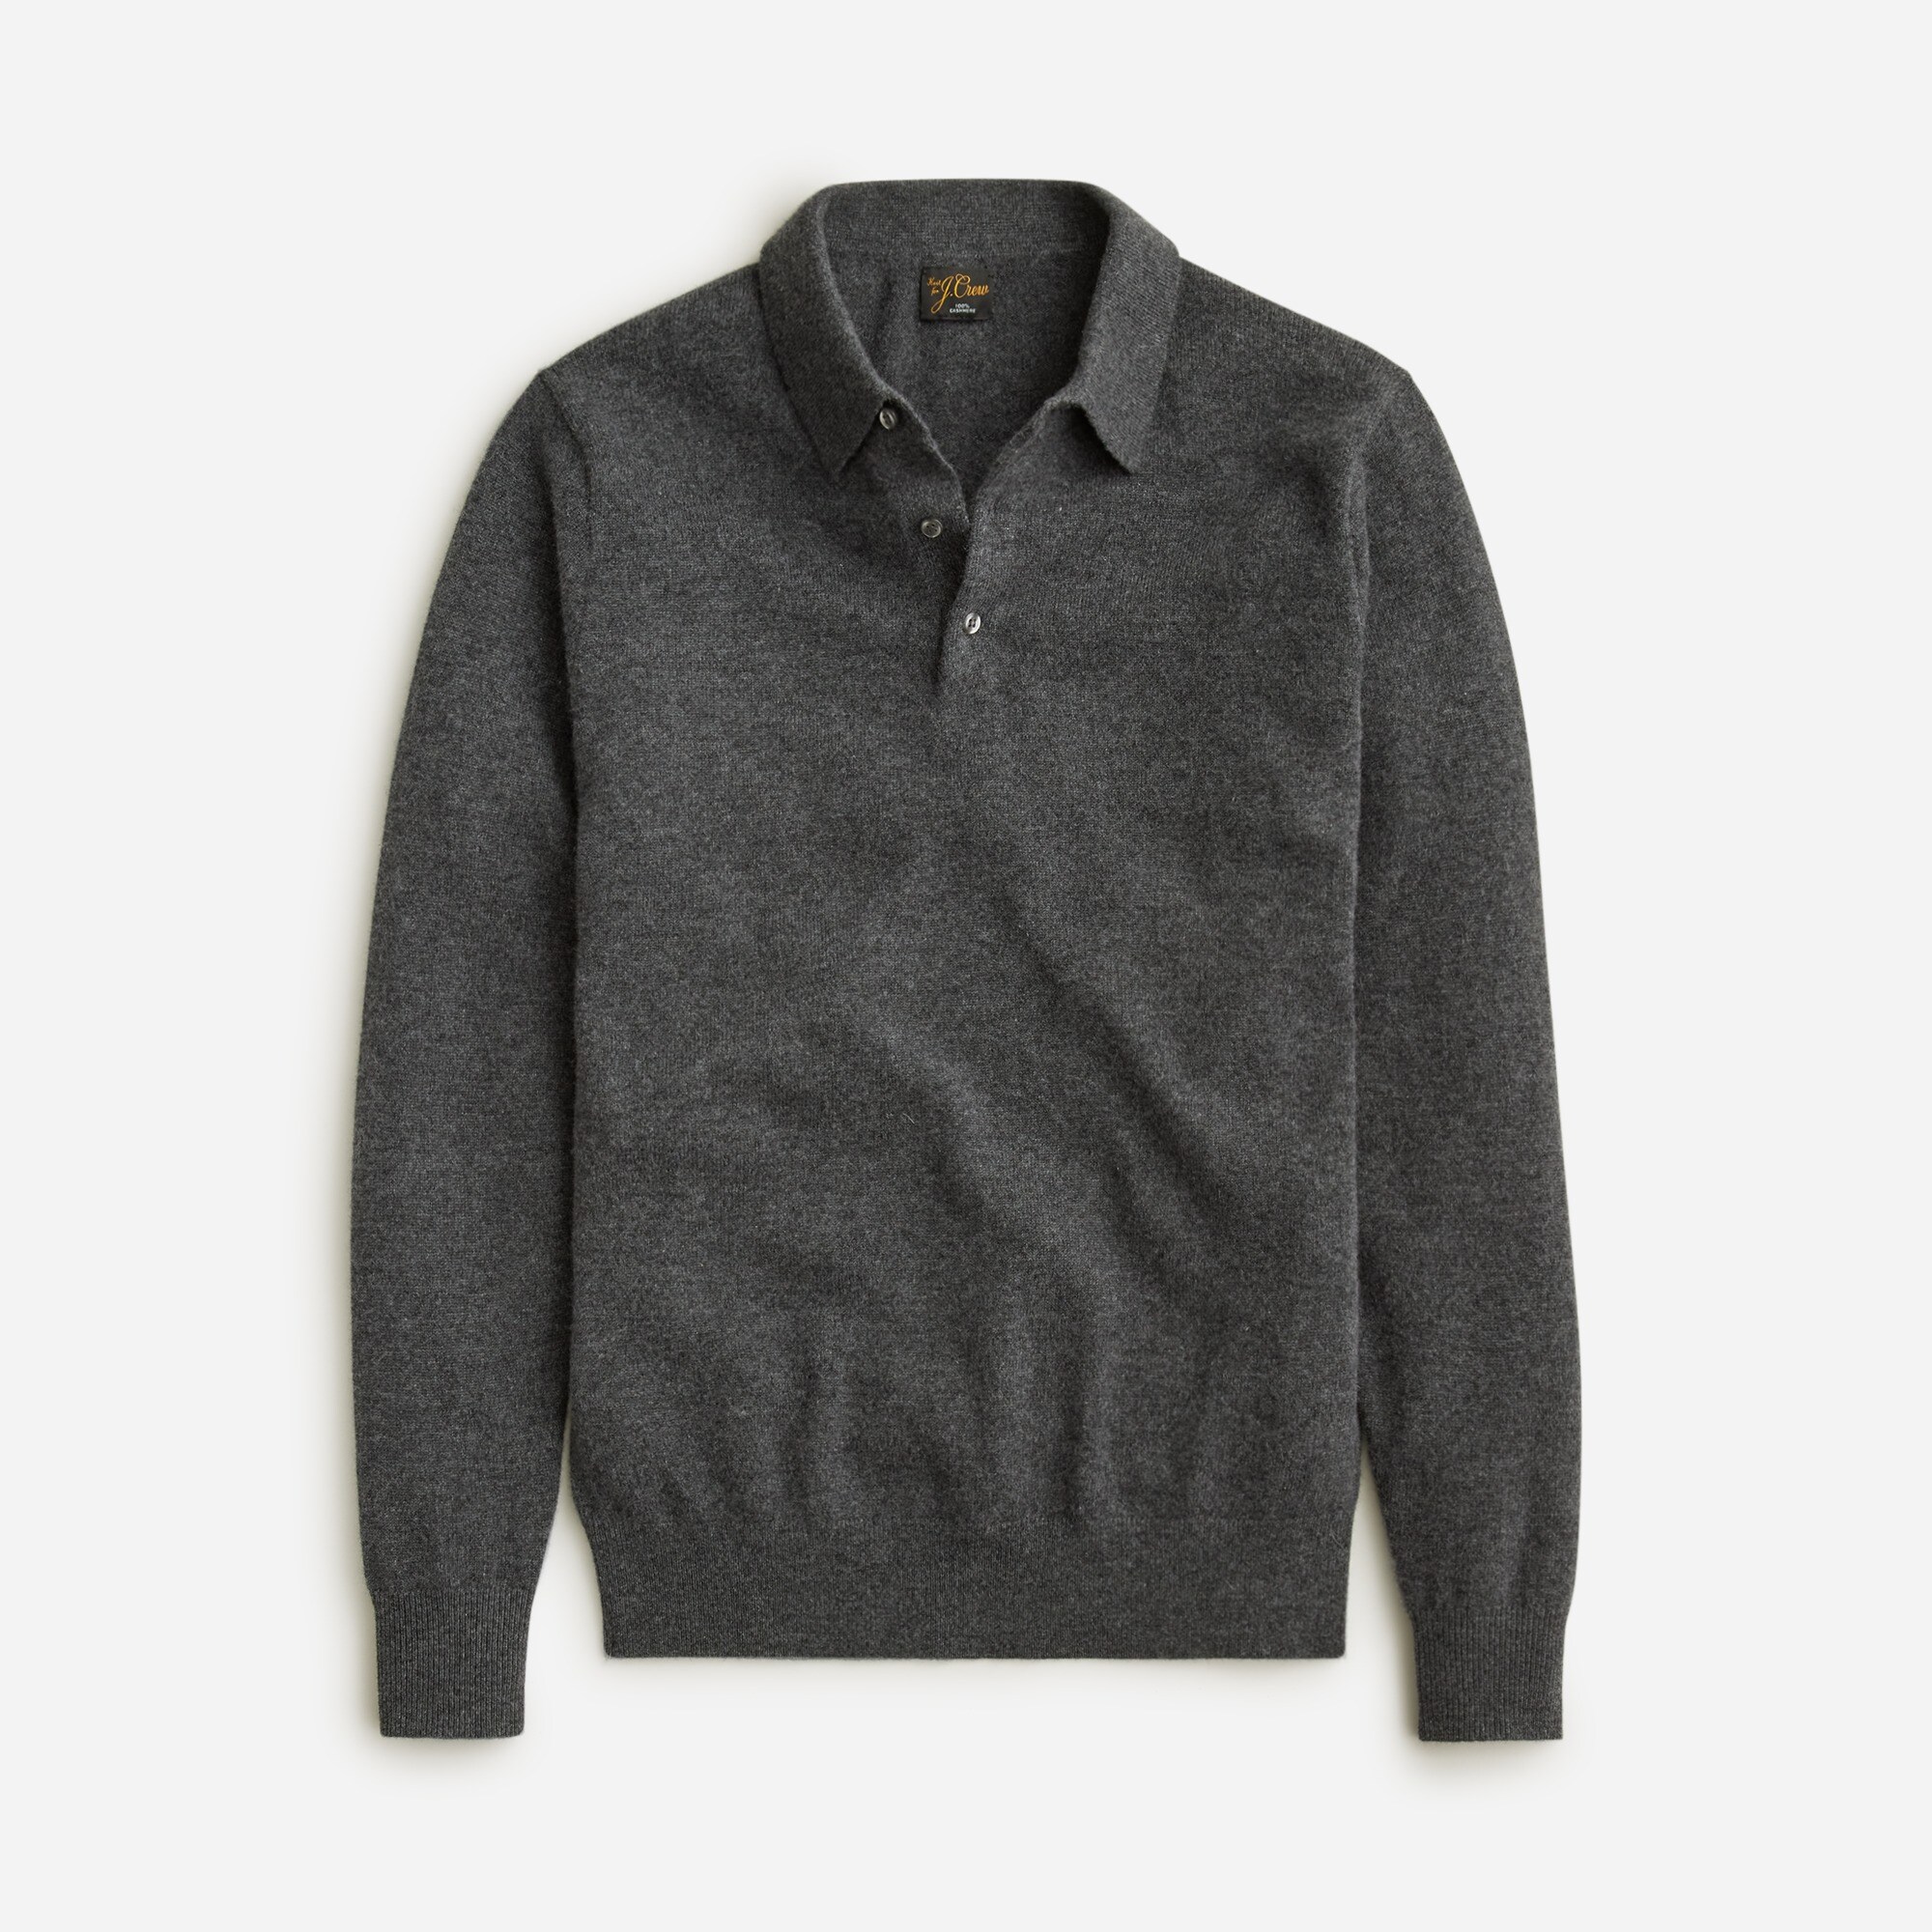  Cashmere collared sweater-polo